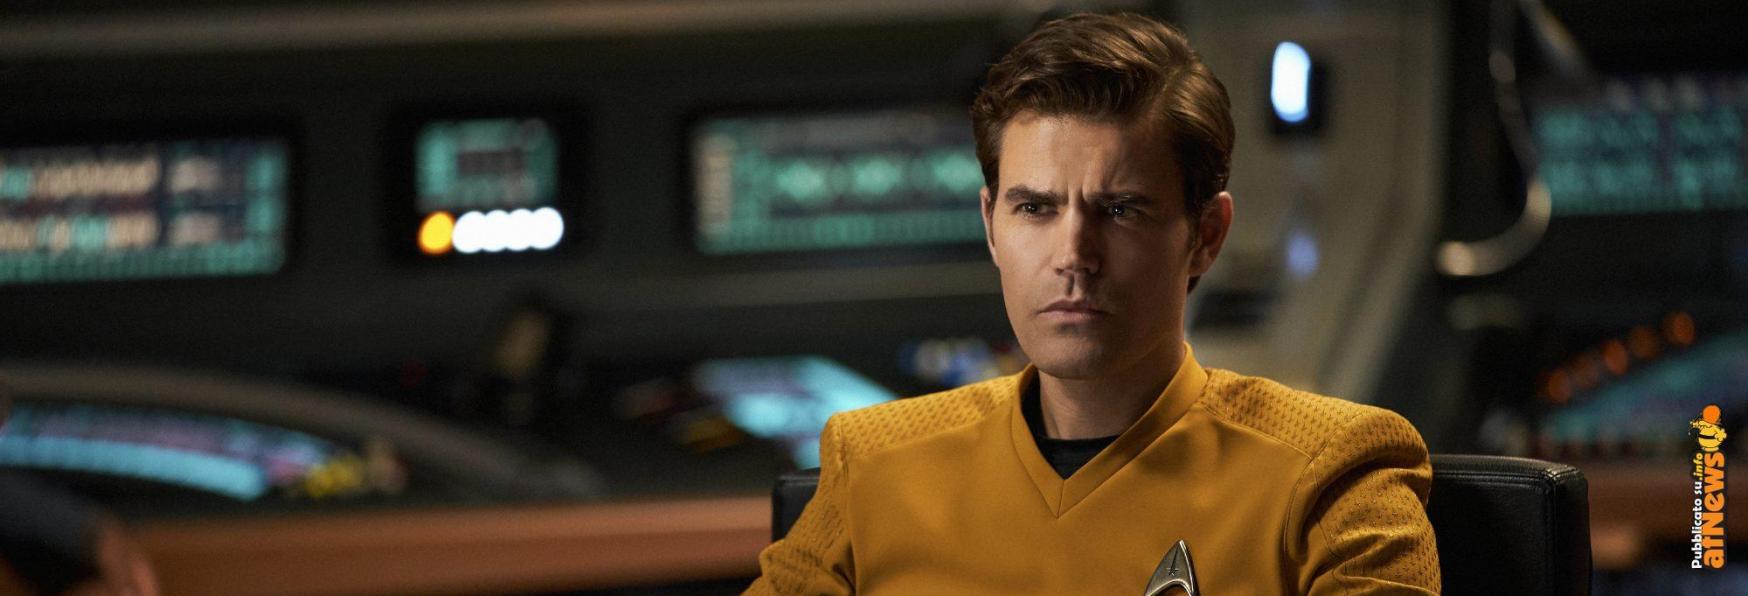 Star Trek: Strange New Worlds 2 - Paul Wesley sarà il Capitano Kirk nella nuova Stagione